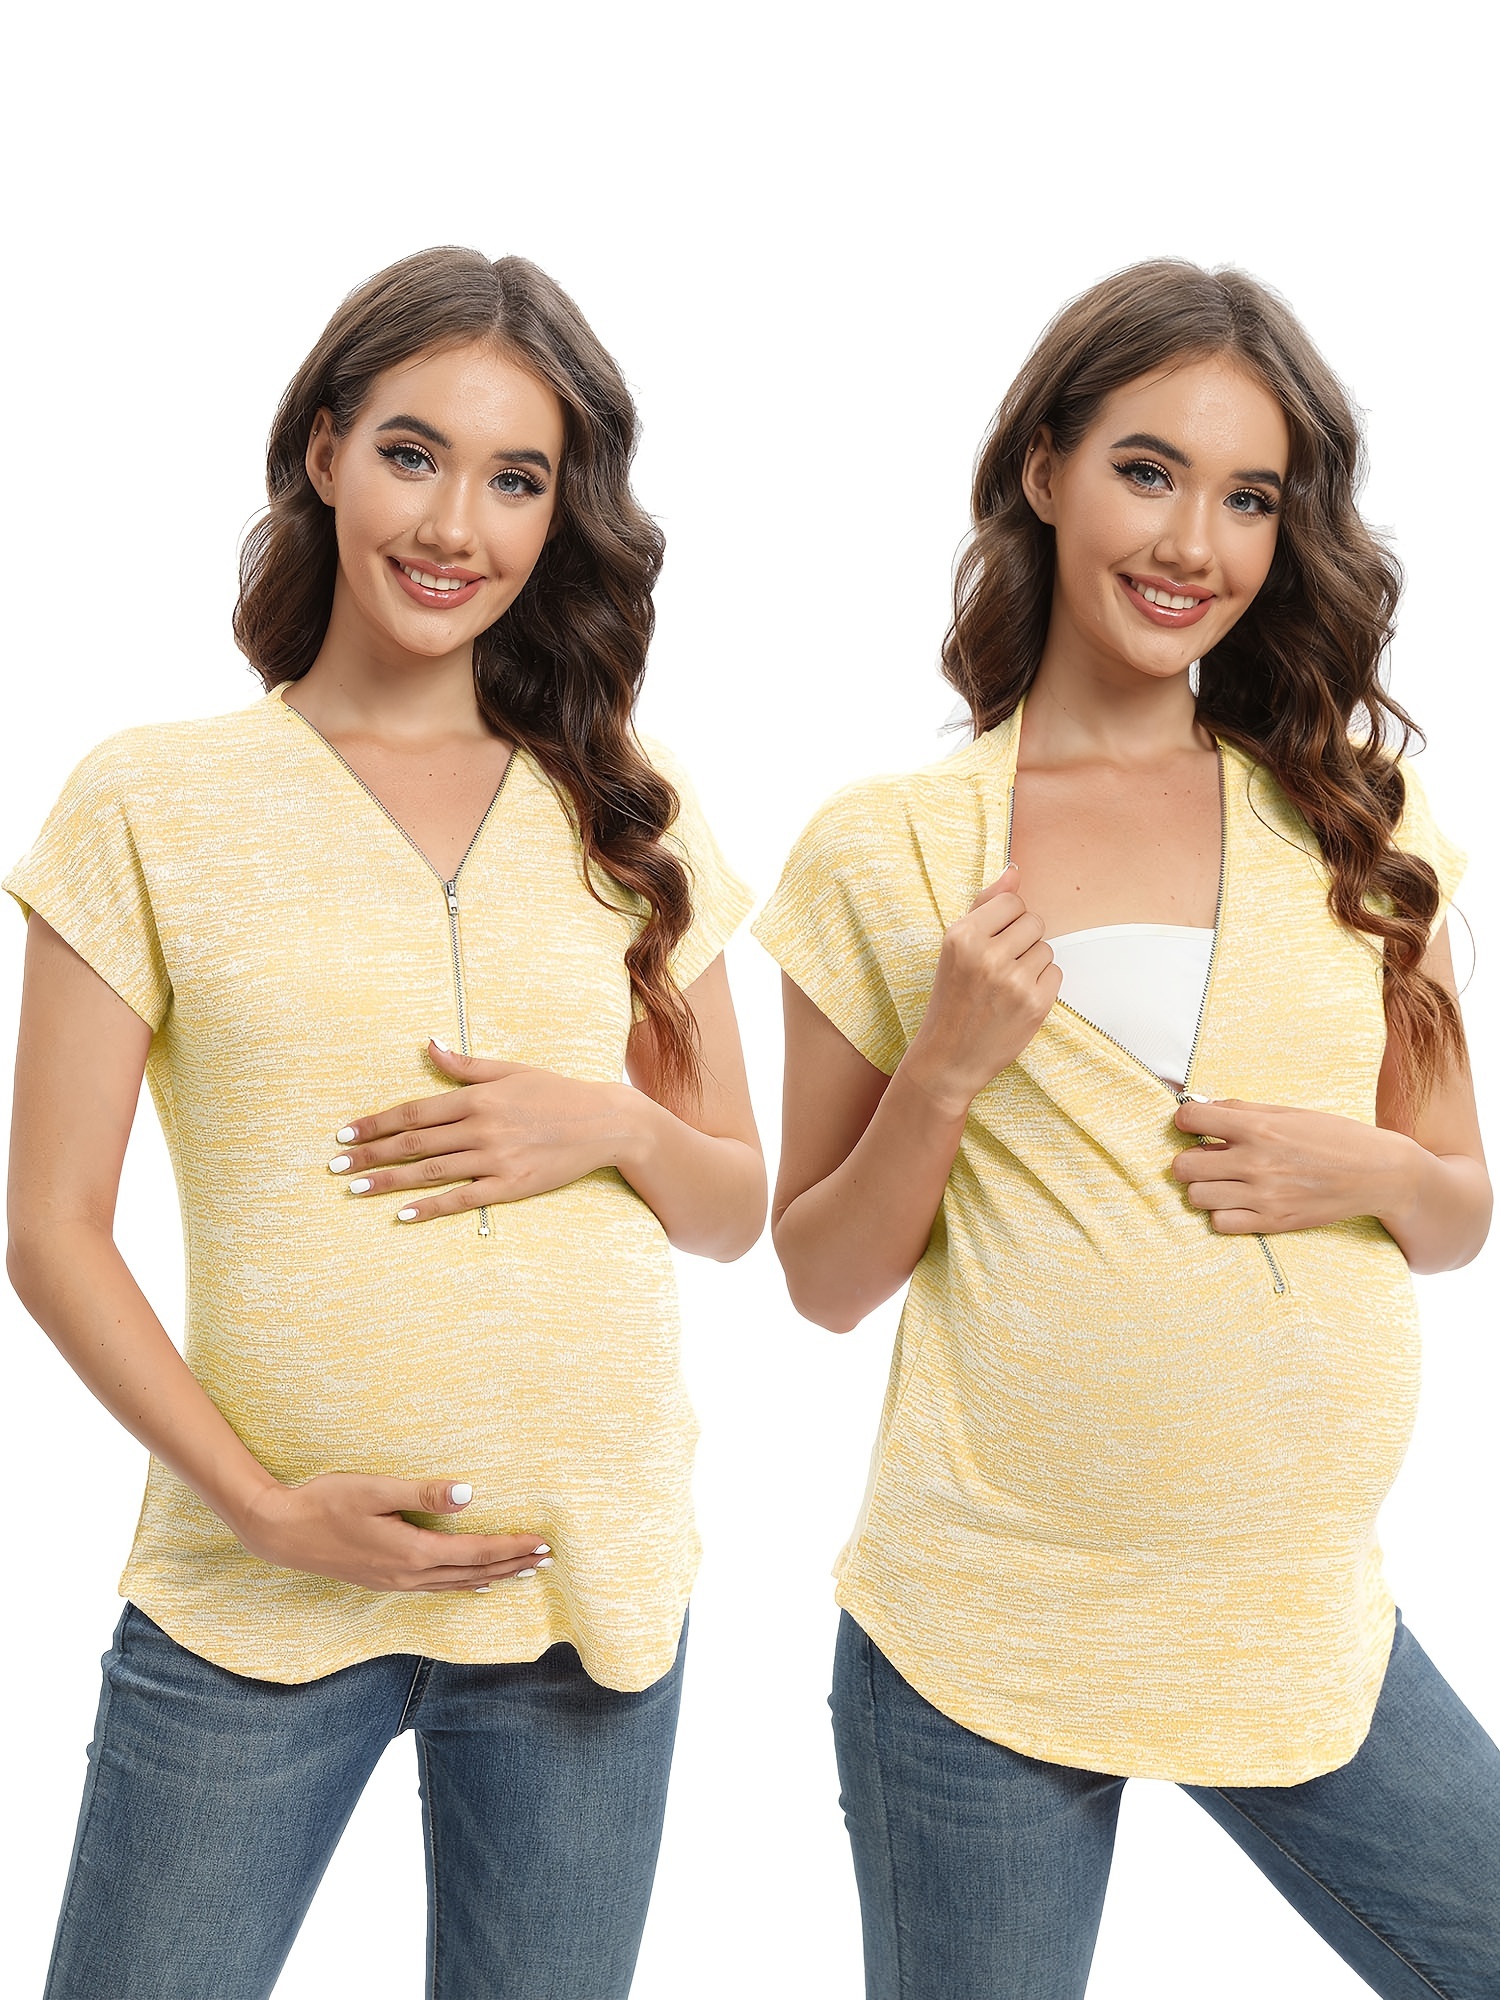 Maternity Clothes, Nursing Wear, Pregnancy Apparel